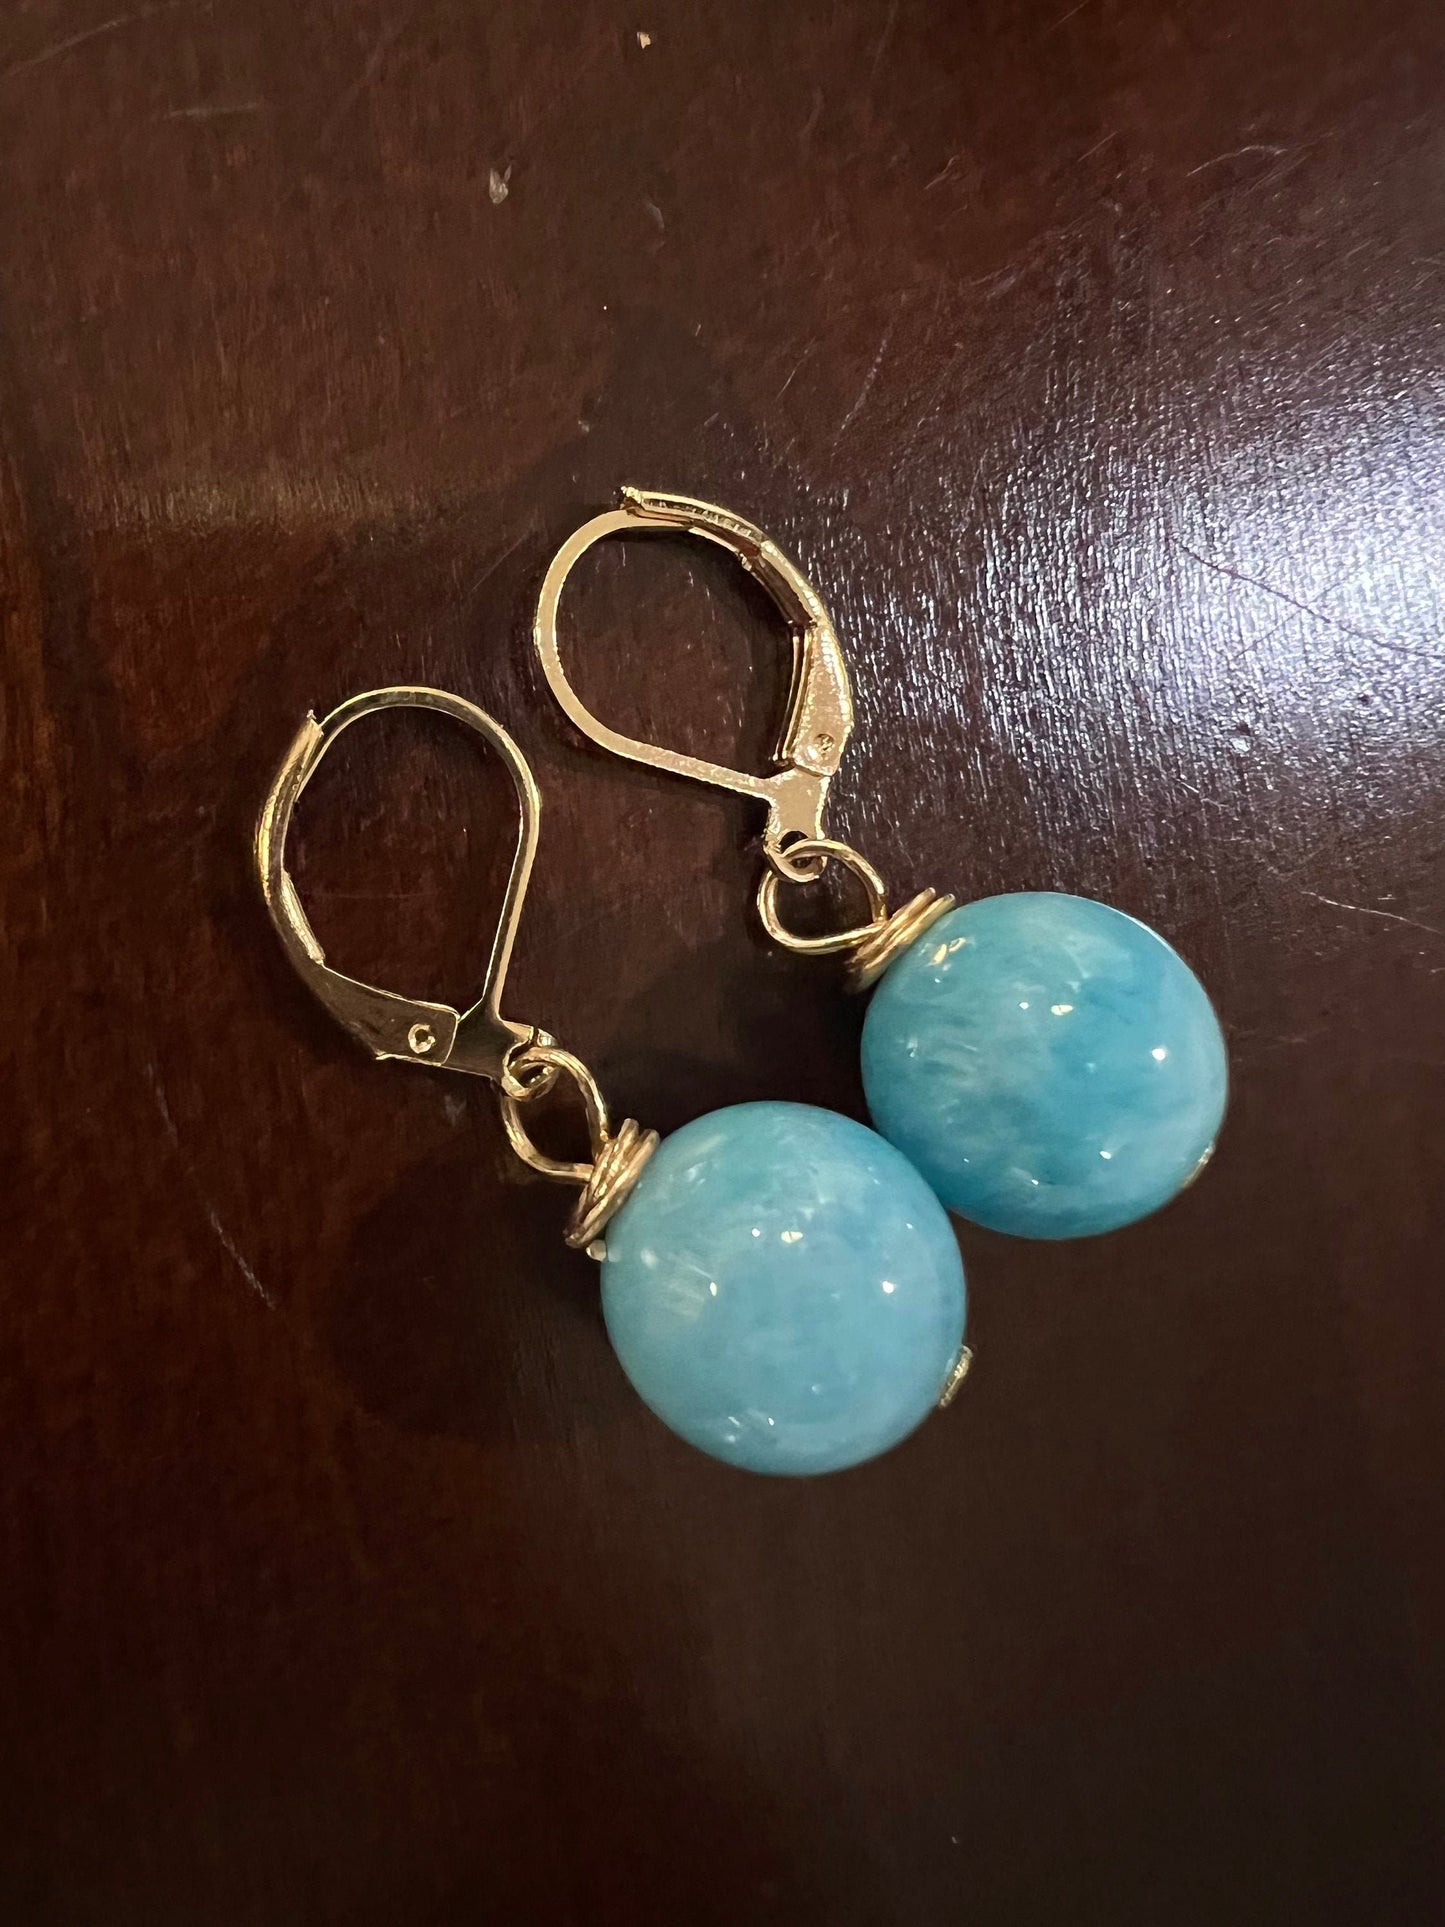 Aquamarine Milky 12mm round handmade Leverback earrings in silver, gold Victorian style elegant minimalist Earrings gift December Birthstone